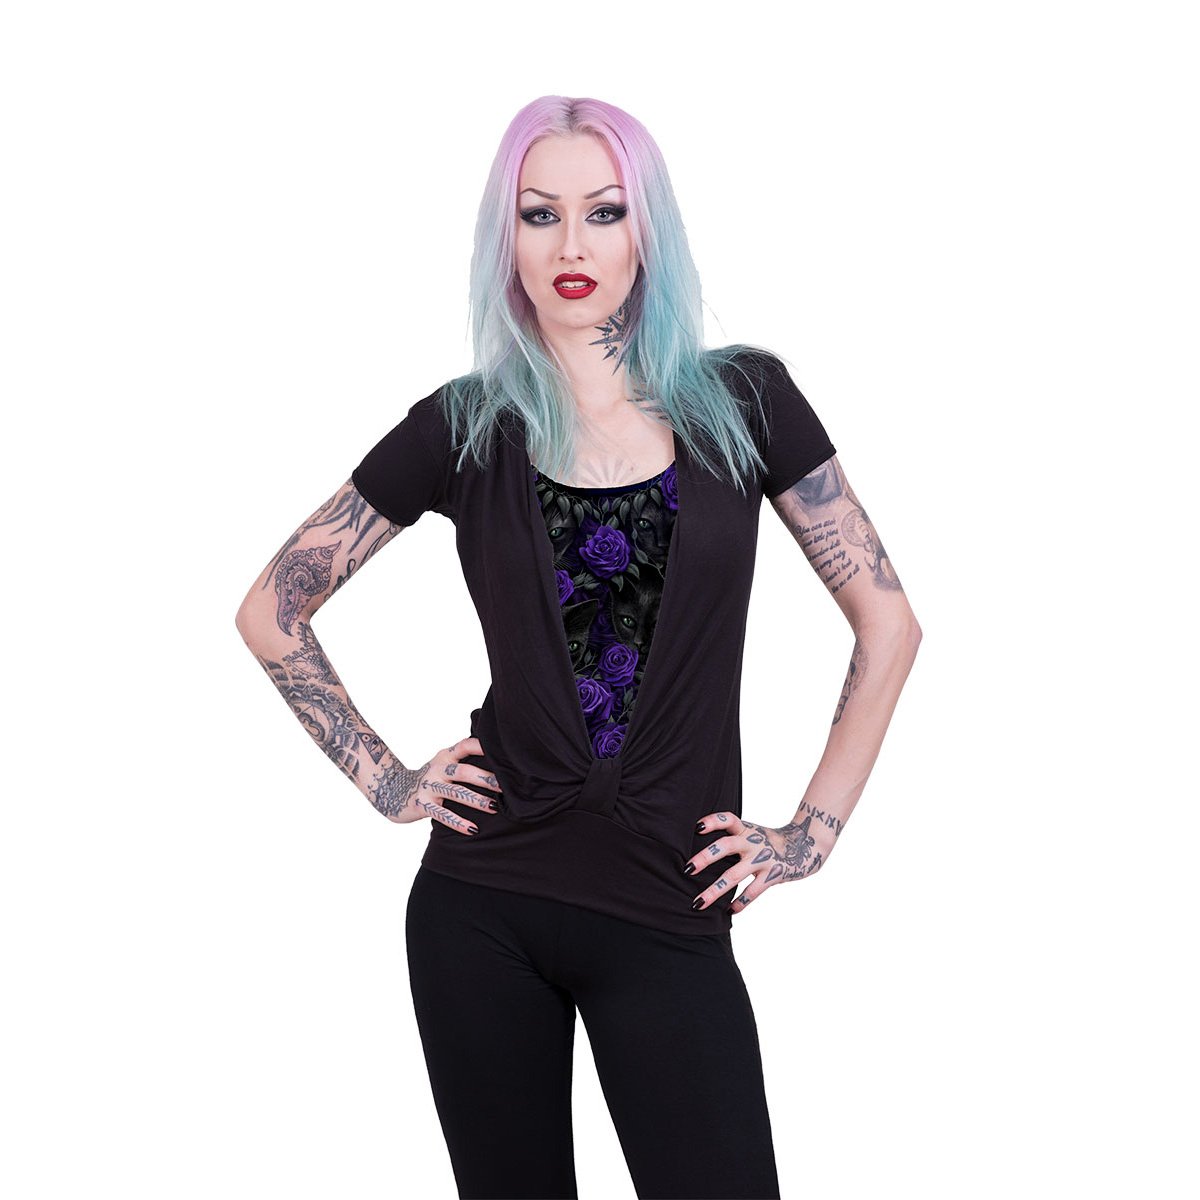 women's gothic cat t shirt with purple rose design